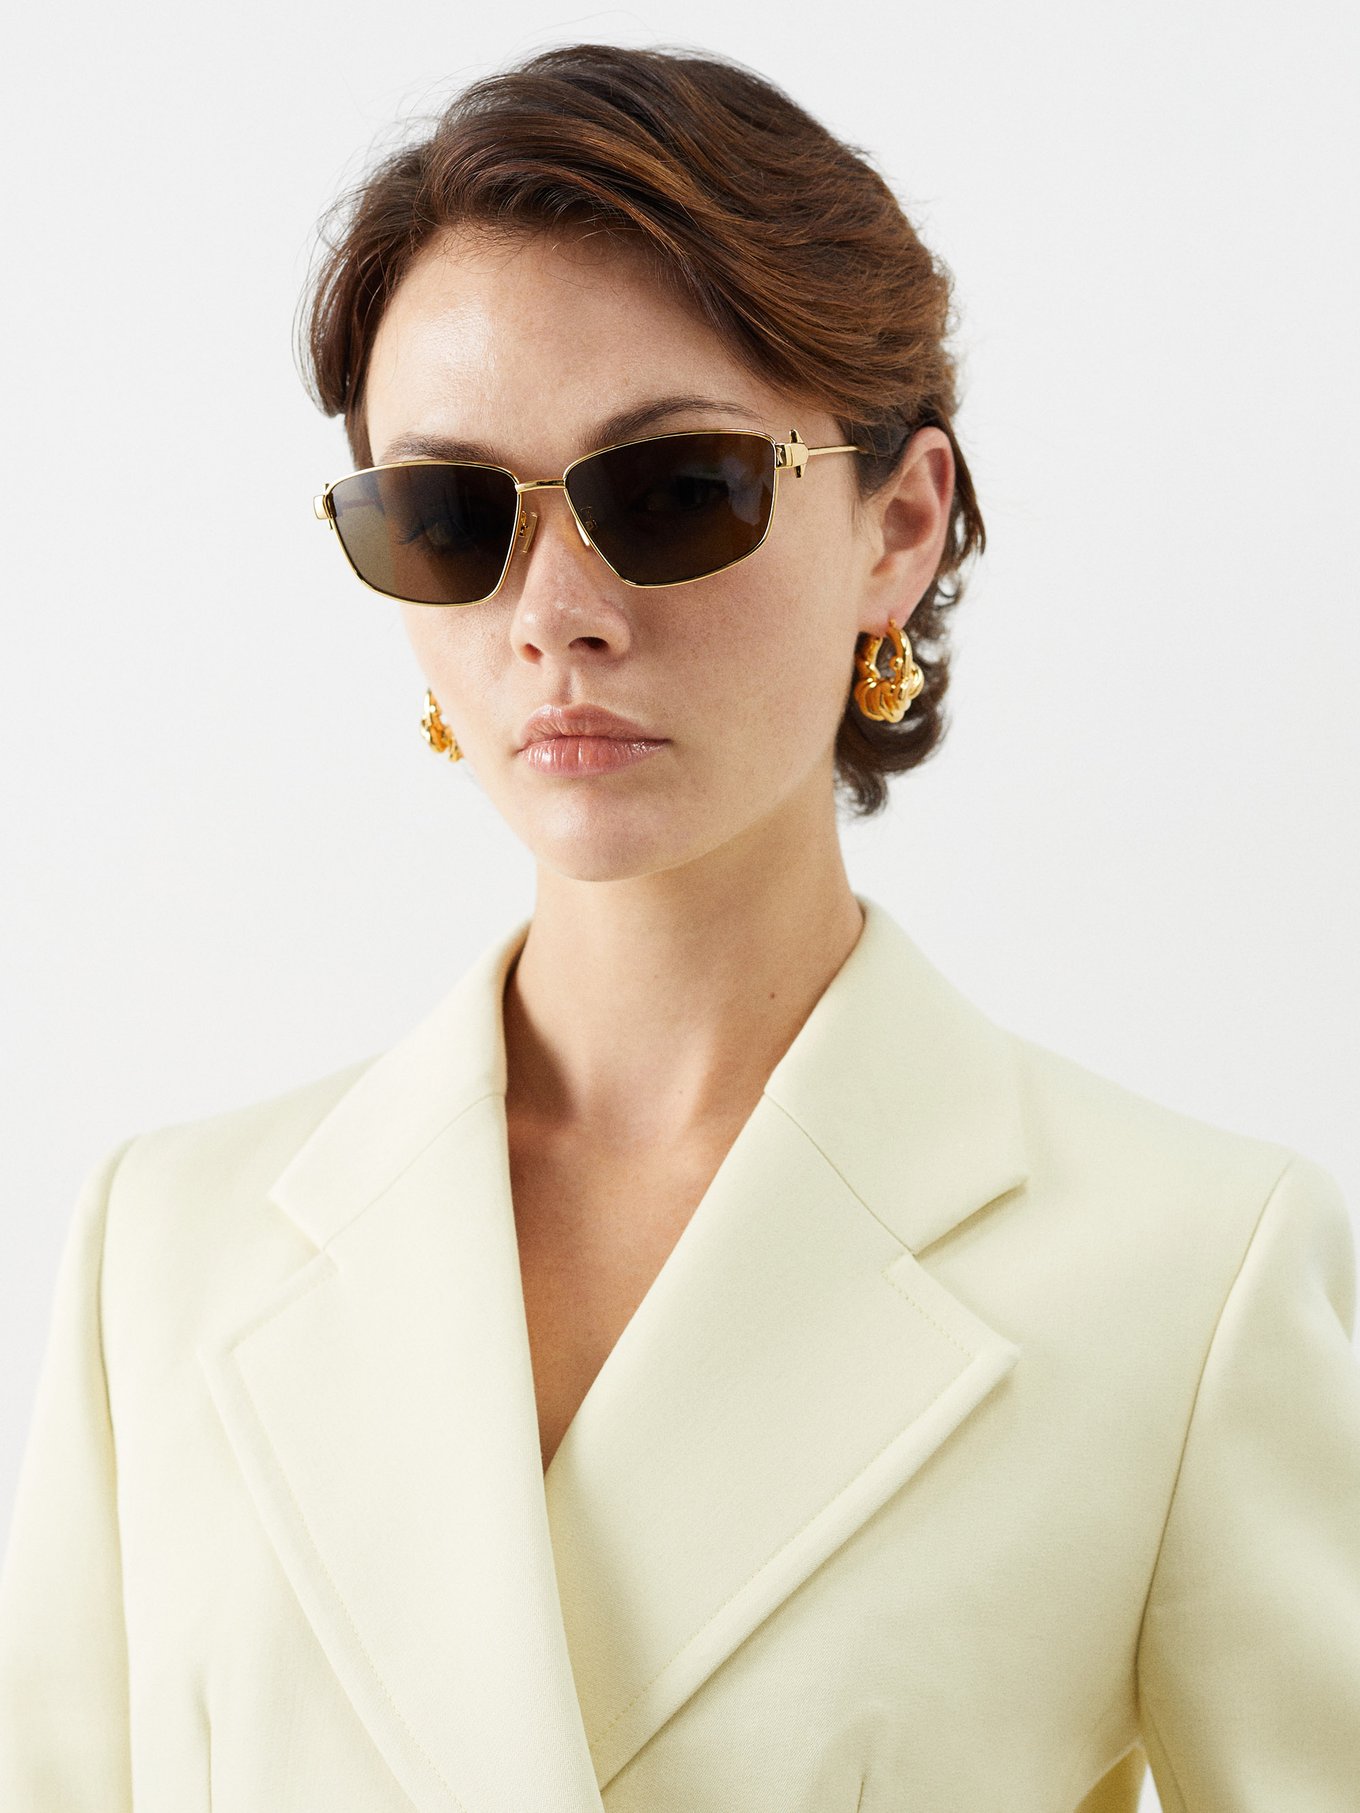 Bottega Veneta Sunglasses - Gold & Green - Metal